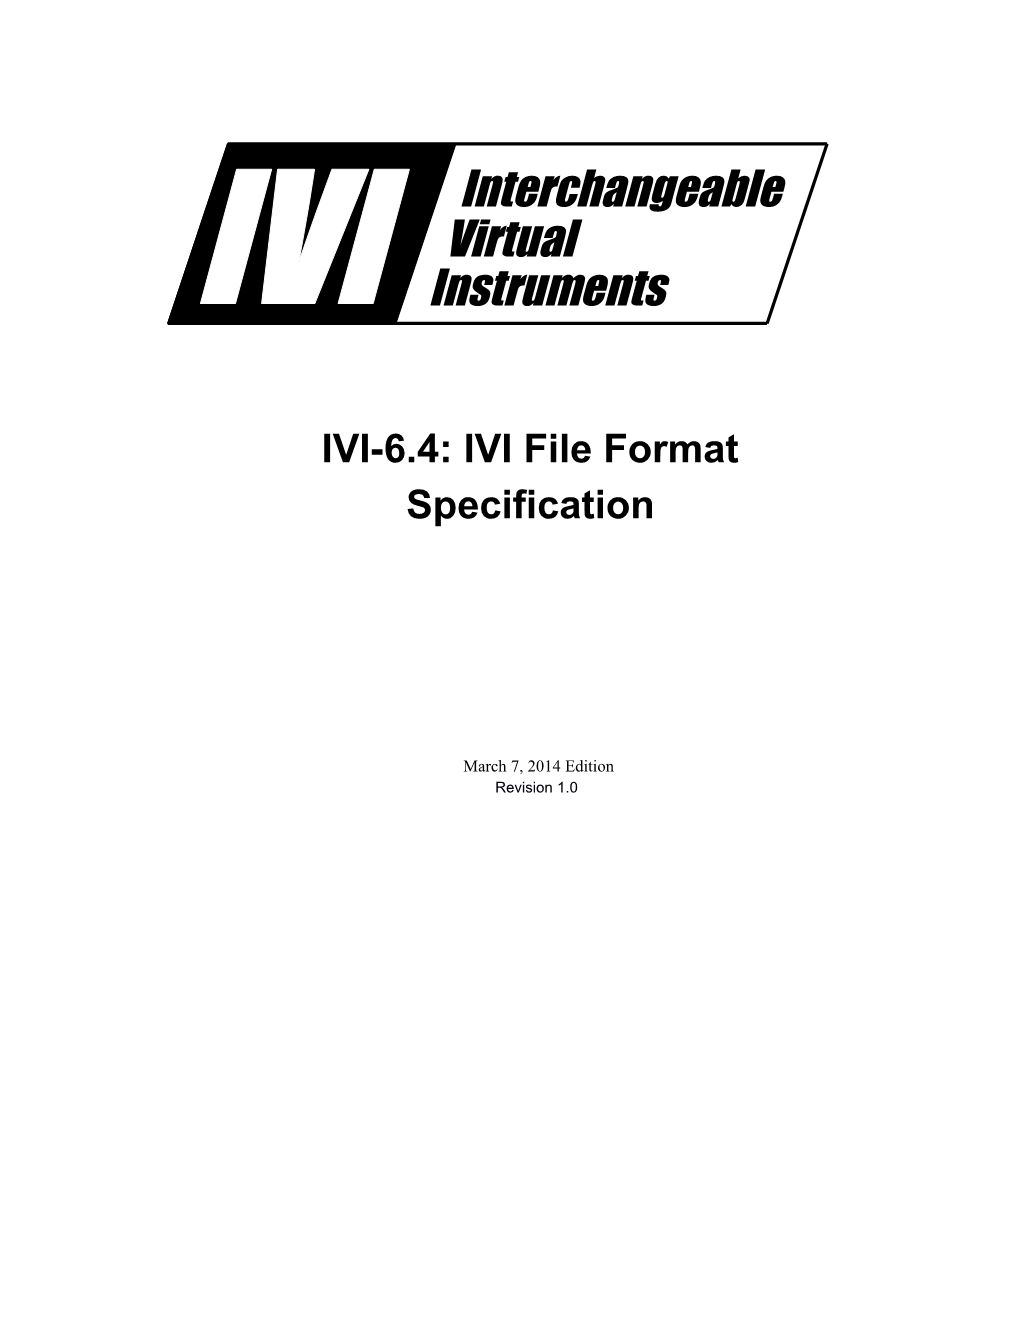 IVI File Format Specification